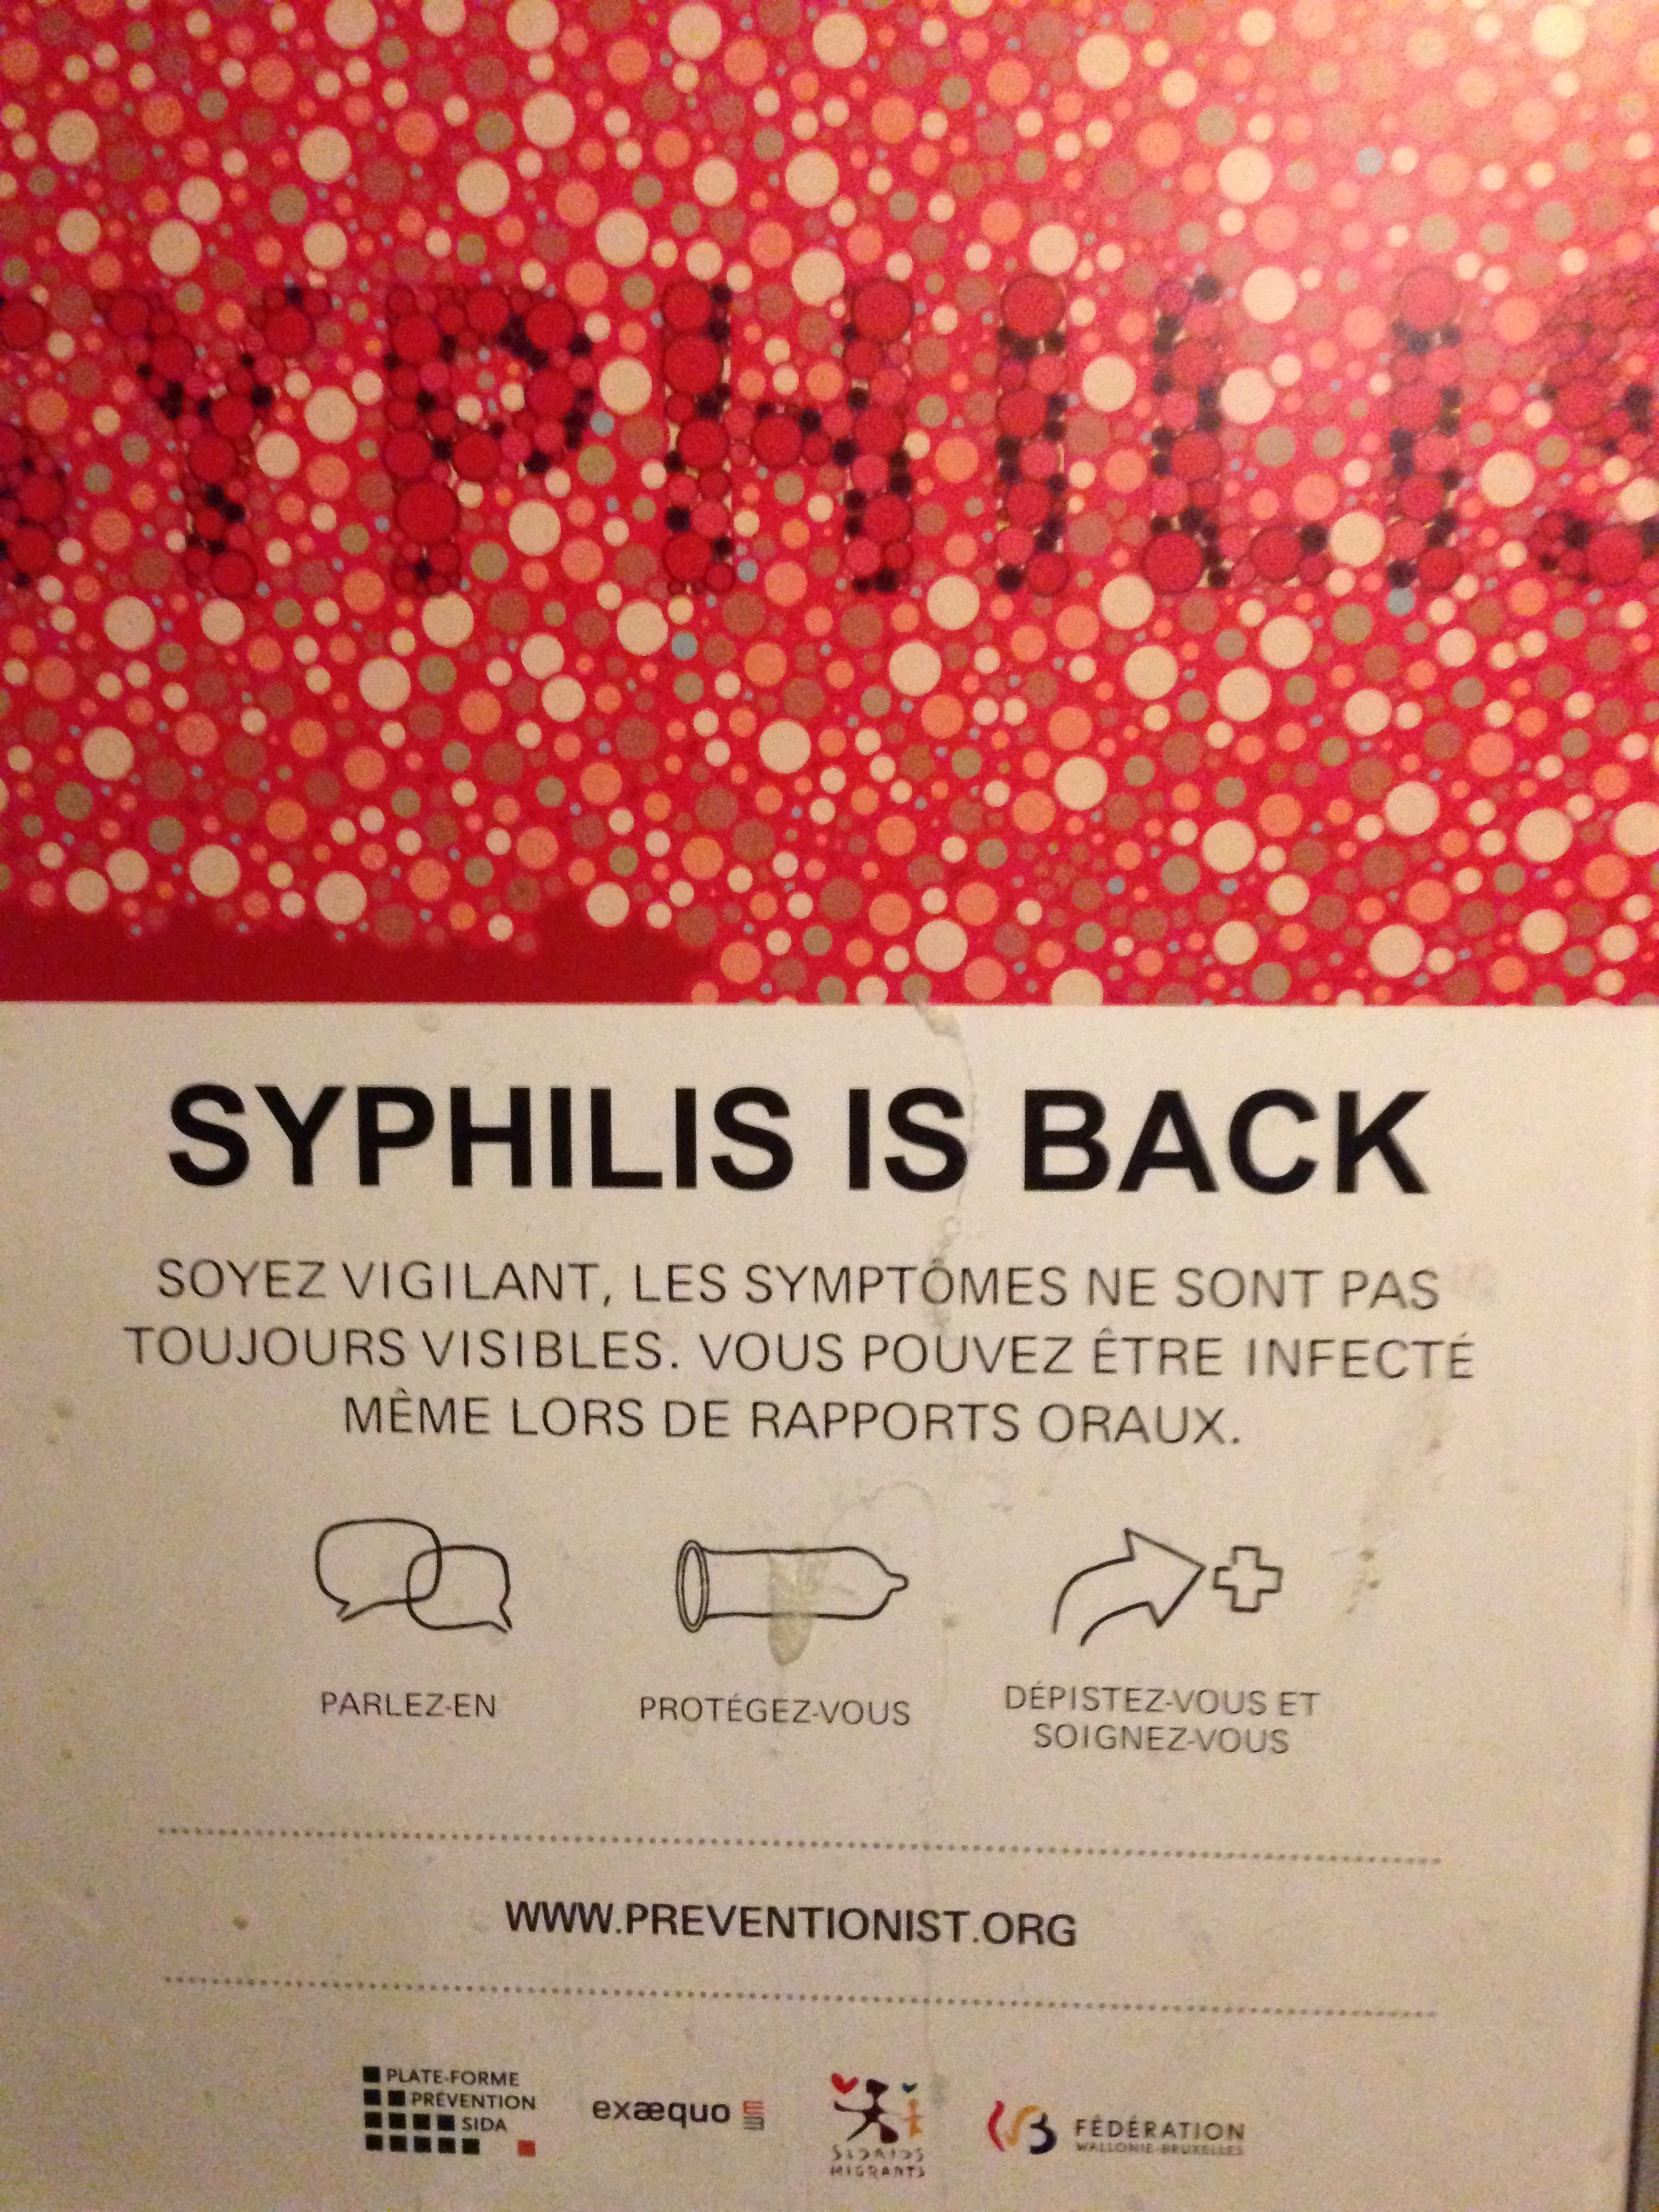 La 'Der des Ders' contre la syphilis?